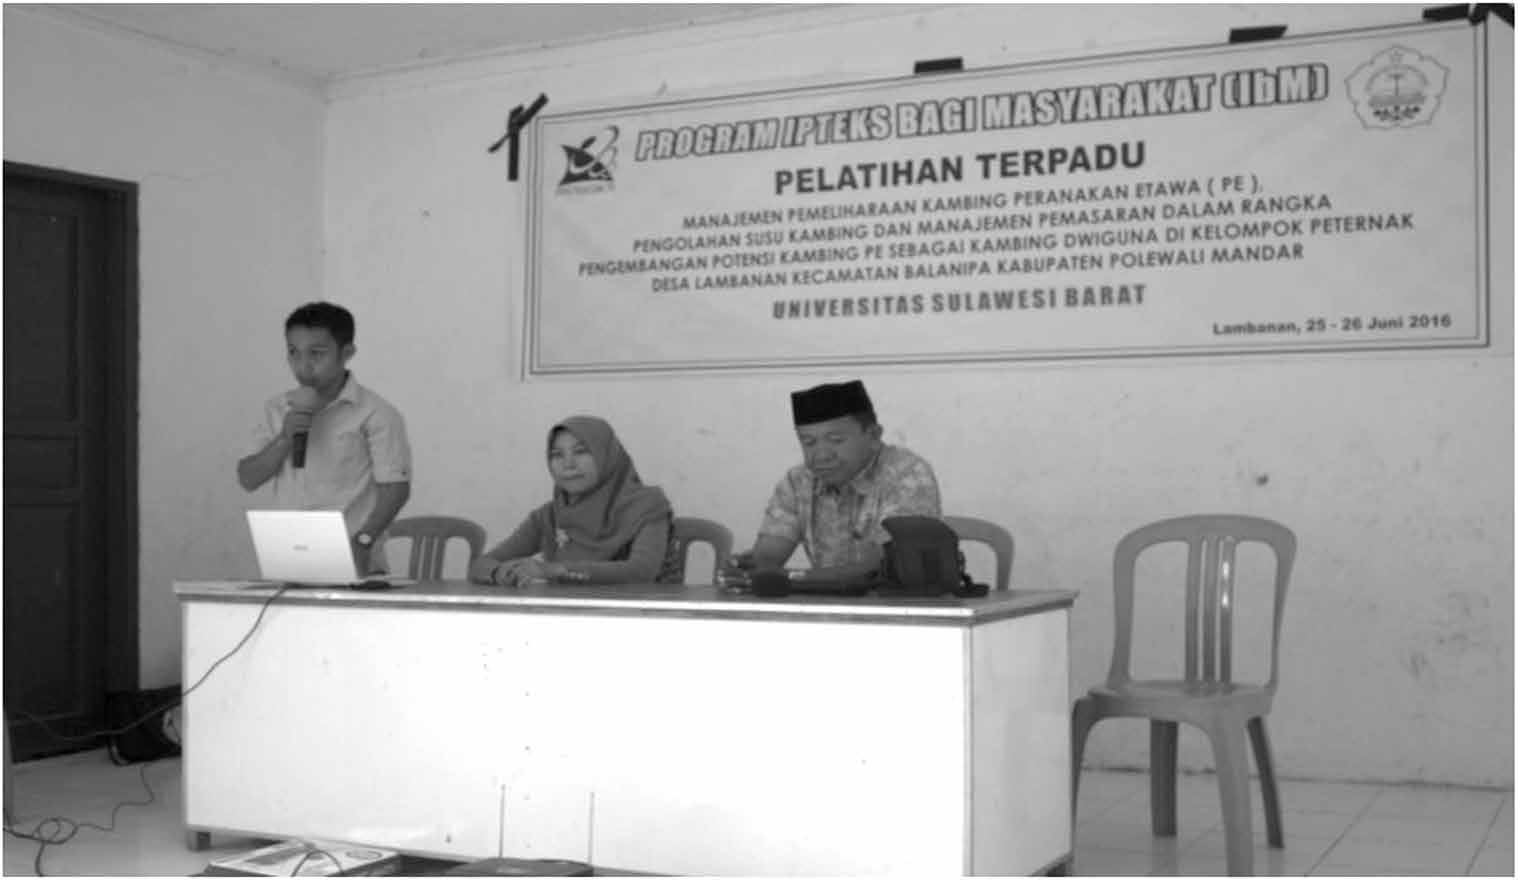 Upaya Pembinaan Masyarakat dalam Rangka Pengembangan Susu Kambing Pasteurisasi (Suke) pada Kelompok Tani di Desa Lambanan, Kecamatan Balanipa, Kabupaten Polewali Mandar, Sulawesi Barat Mandar, yaitu